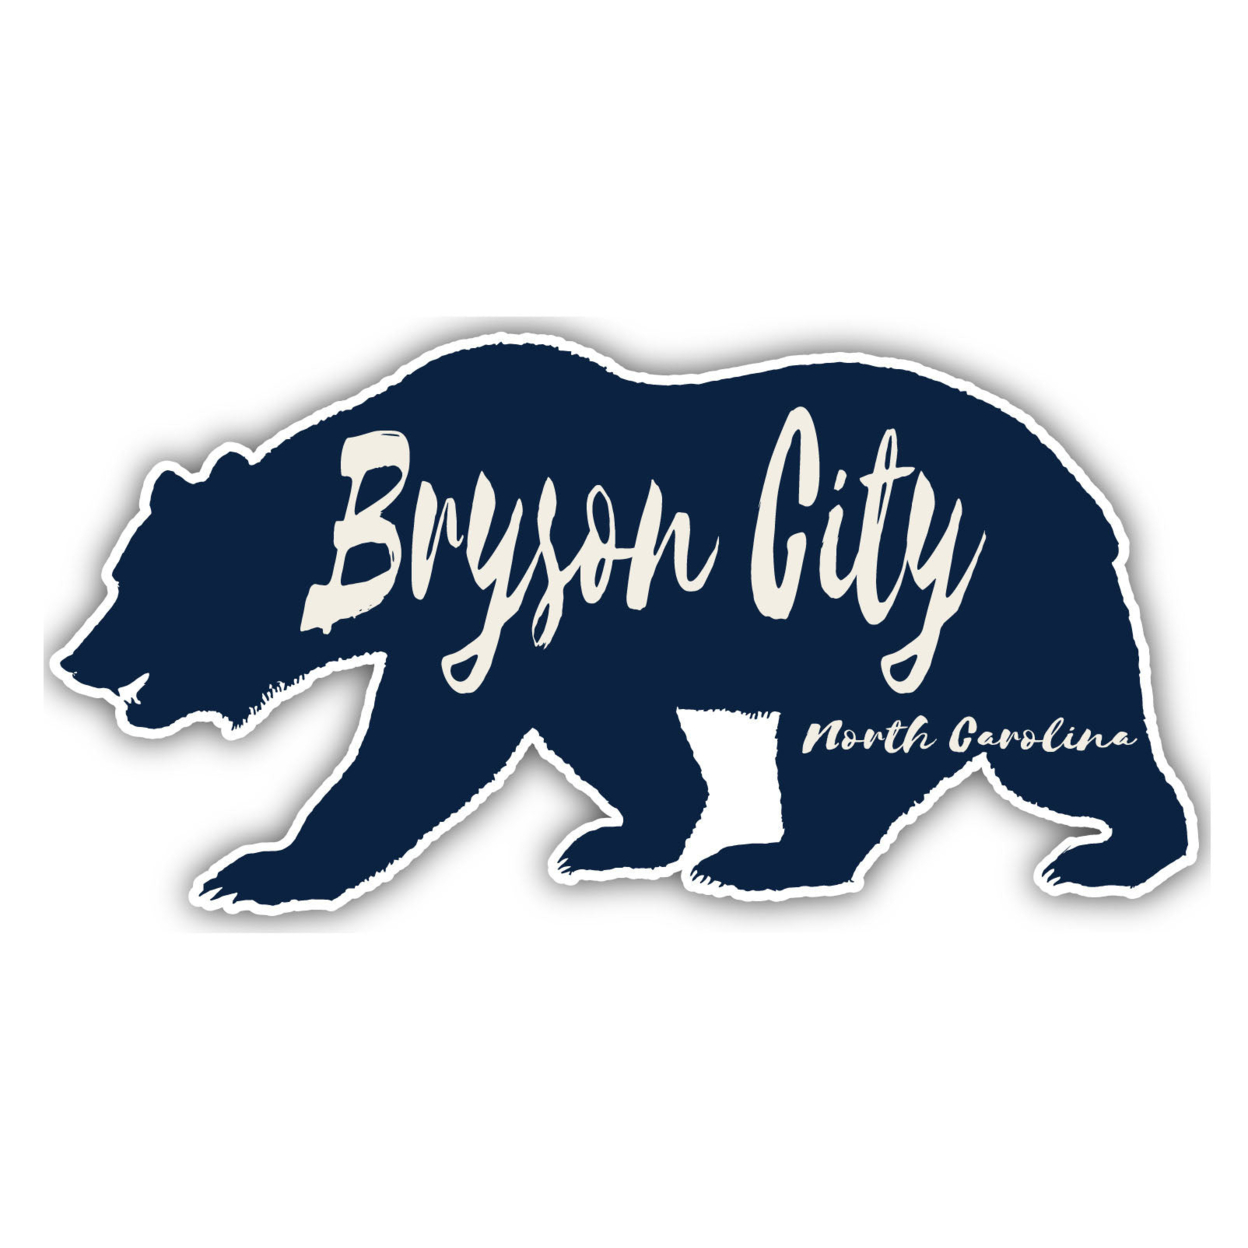 Bryson City North Carolina Souvenir Decorative Stickers (Choose Theme And Size) - 4-Pack, 2-Inch, Bear